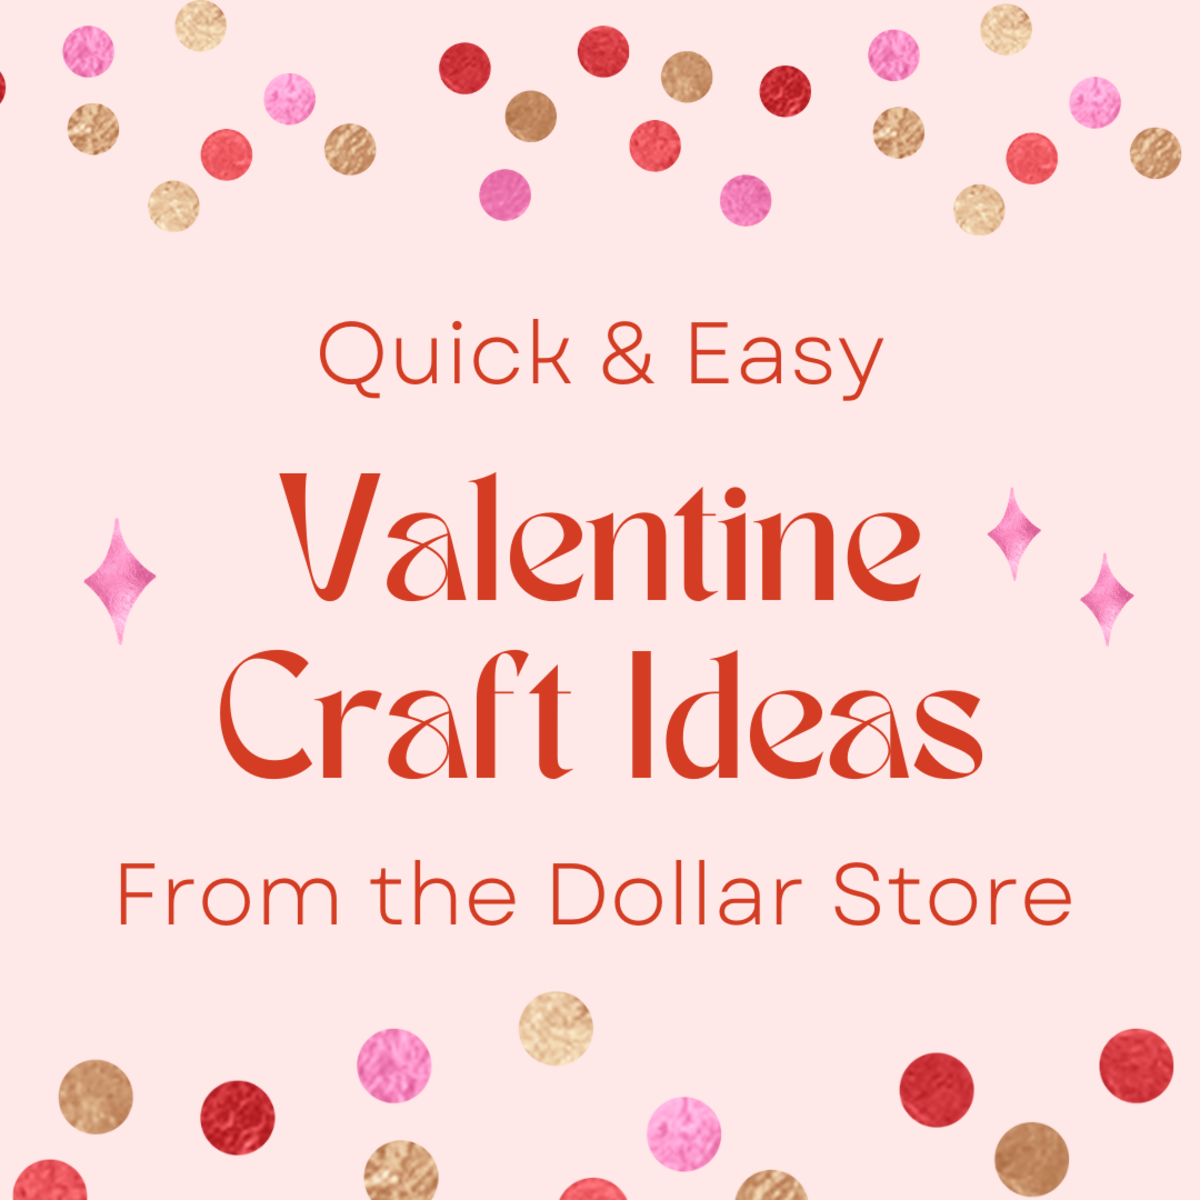 Easy Dollar Store Valentine's Day Crafts - FeltMagnet